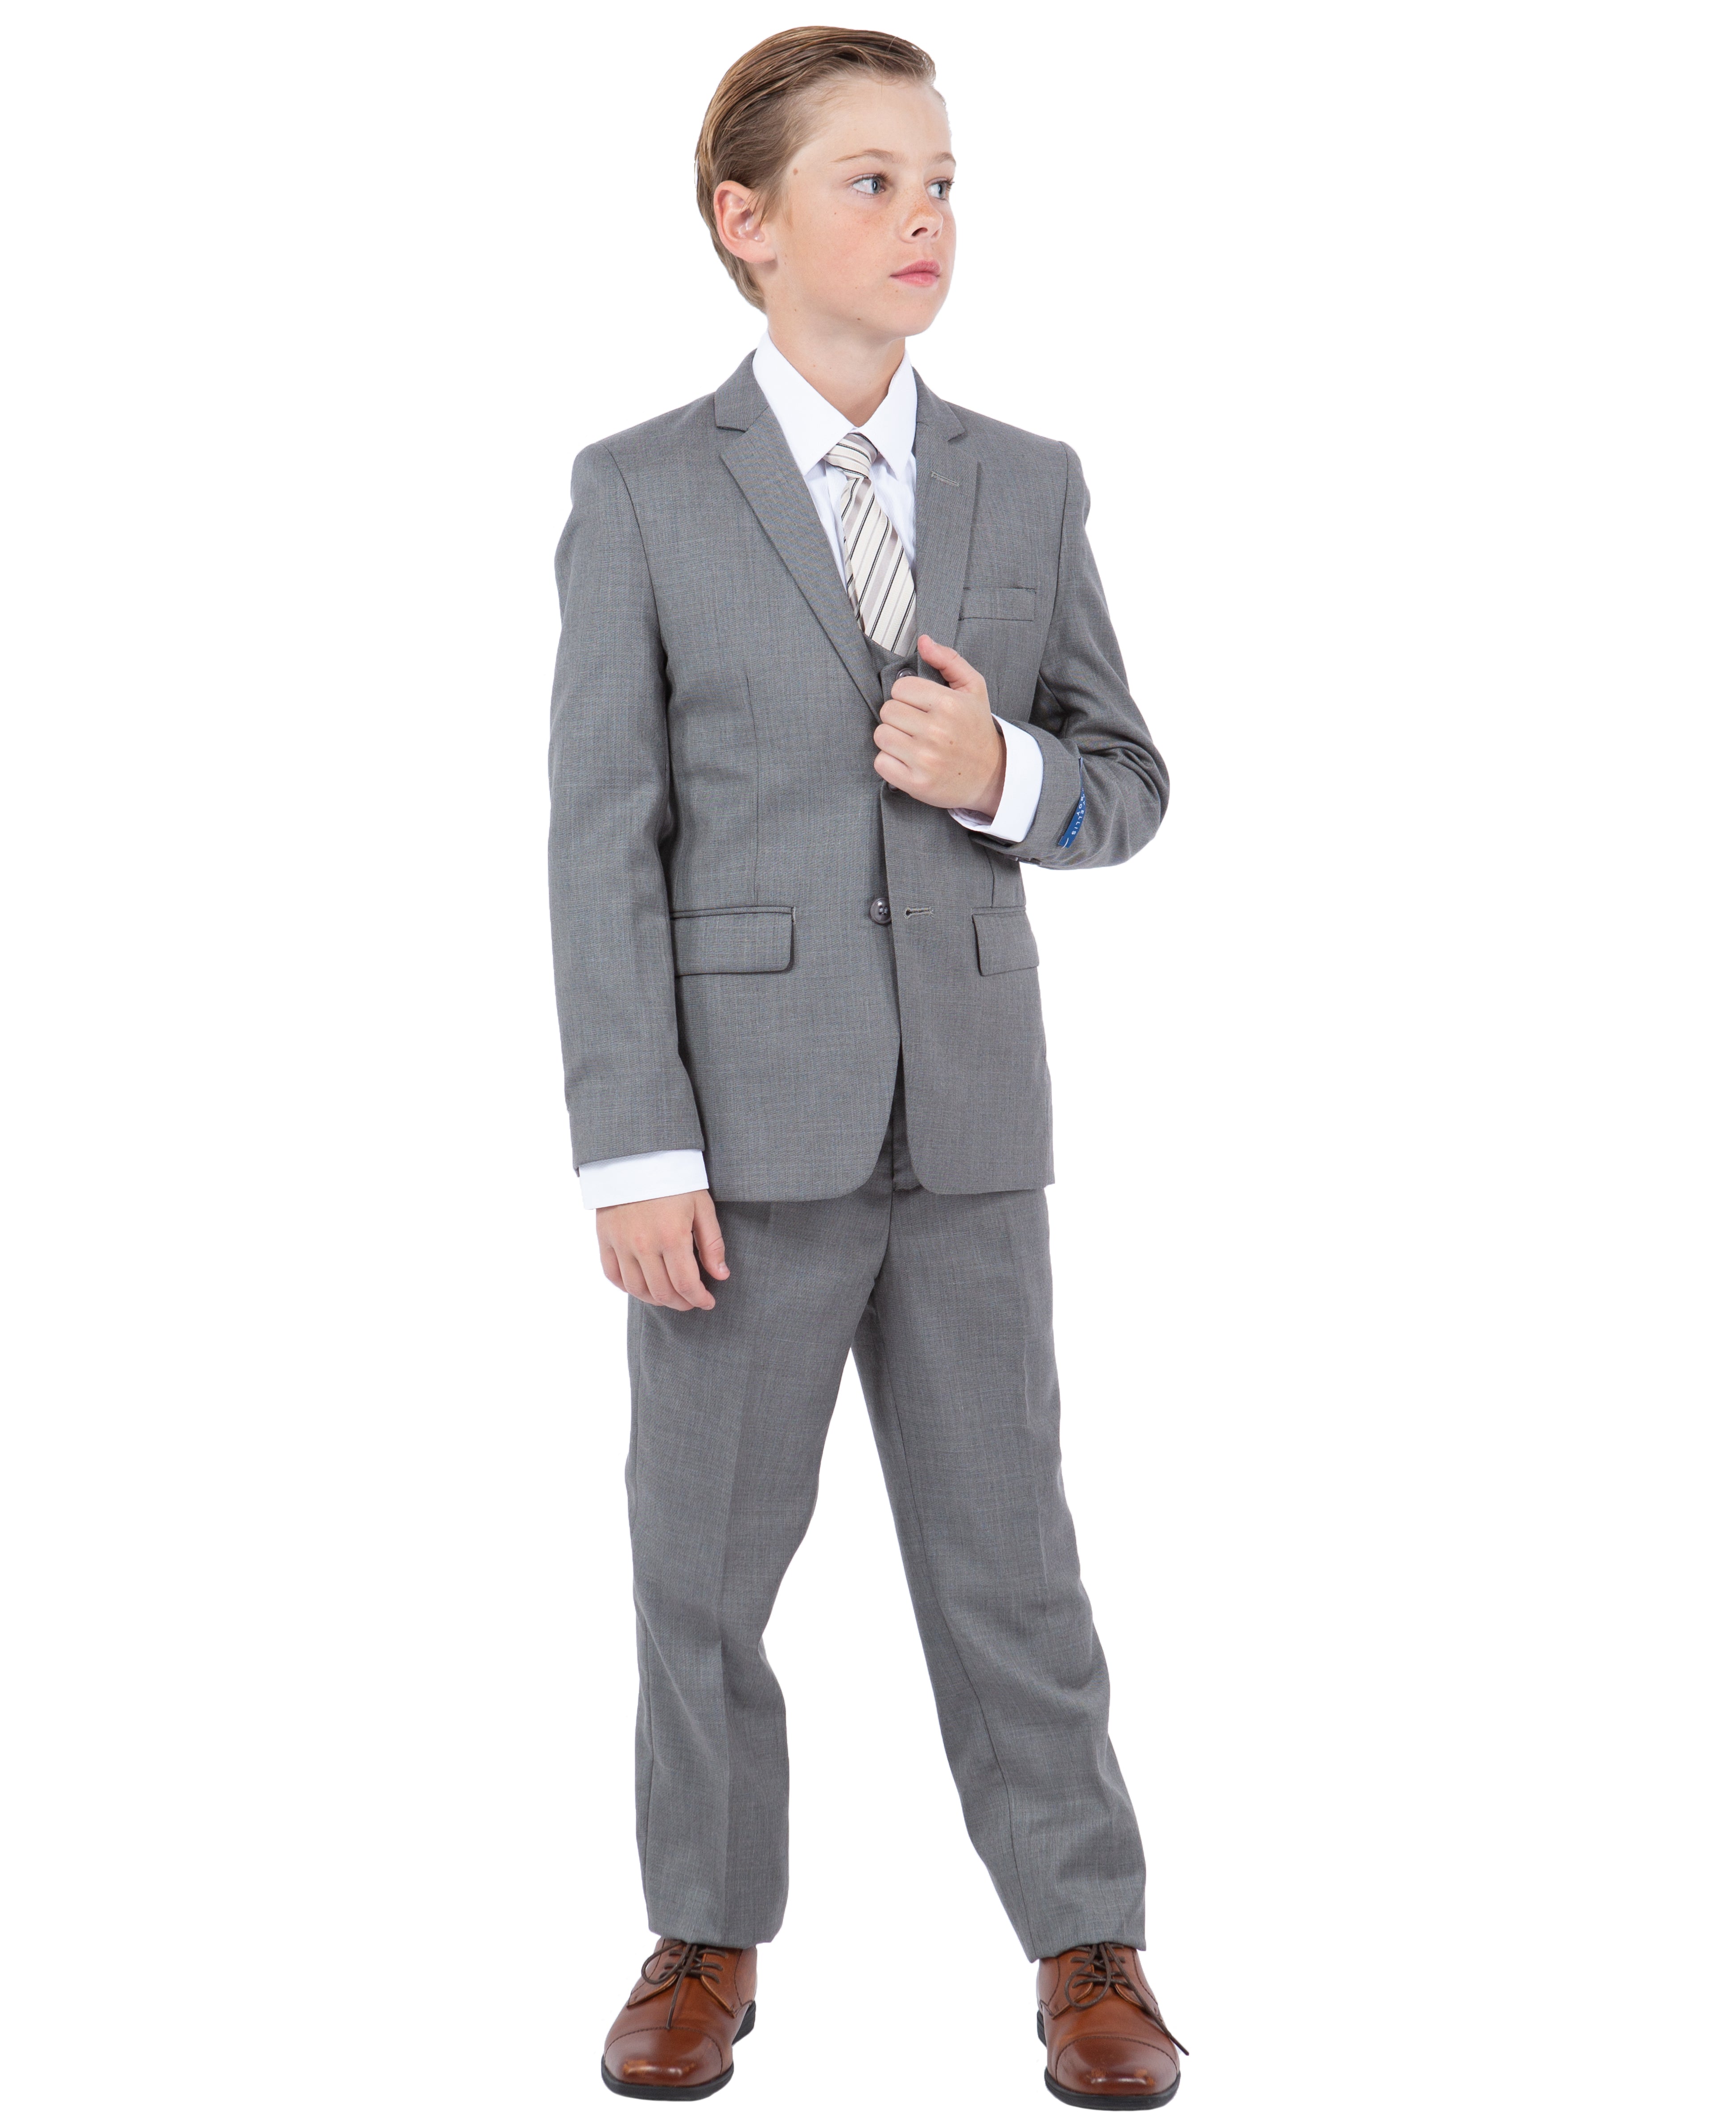 Sharkskin-5pc Suit, Aluminum Grey Perry Ellis